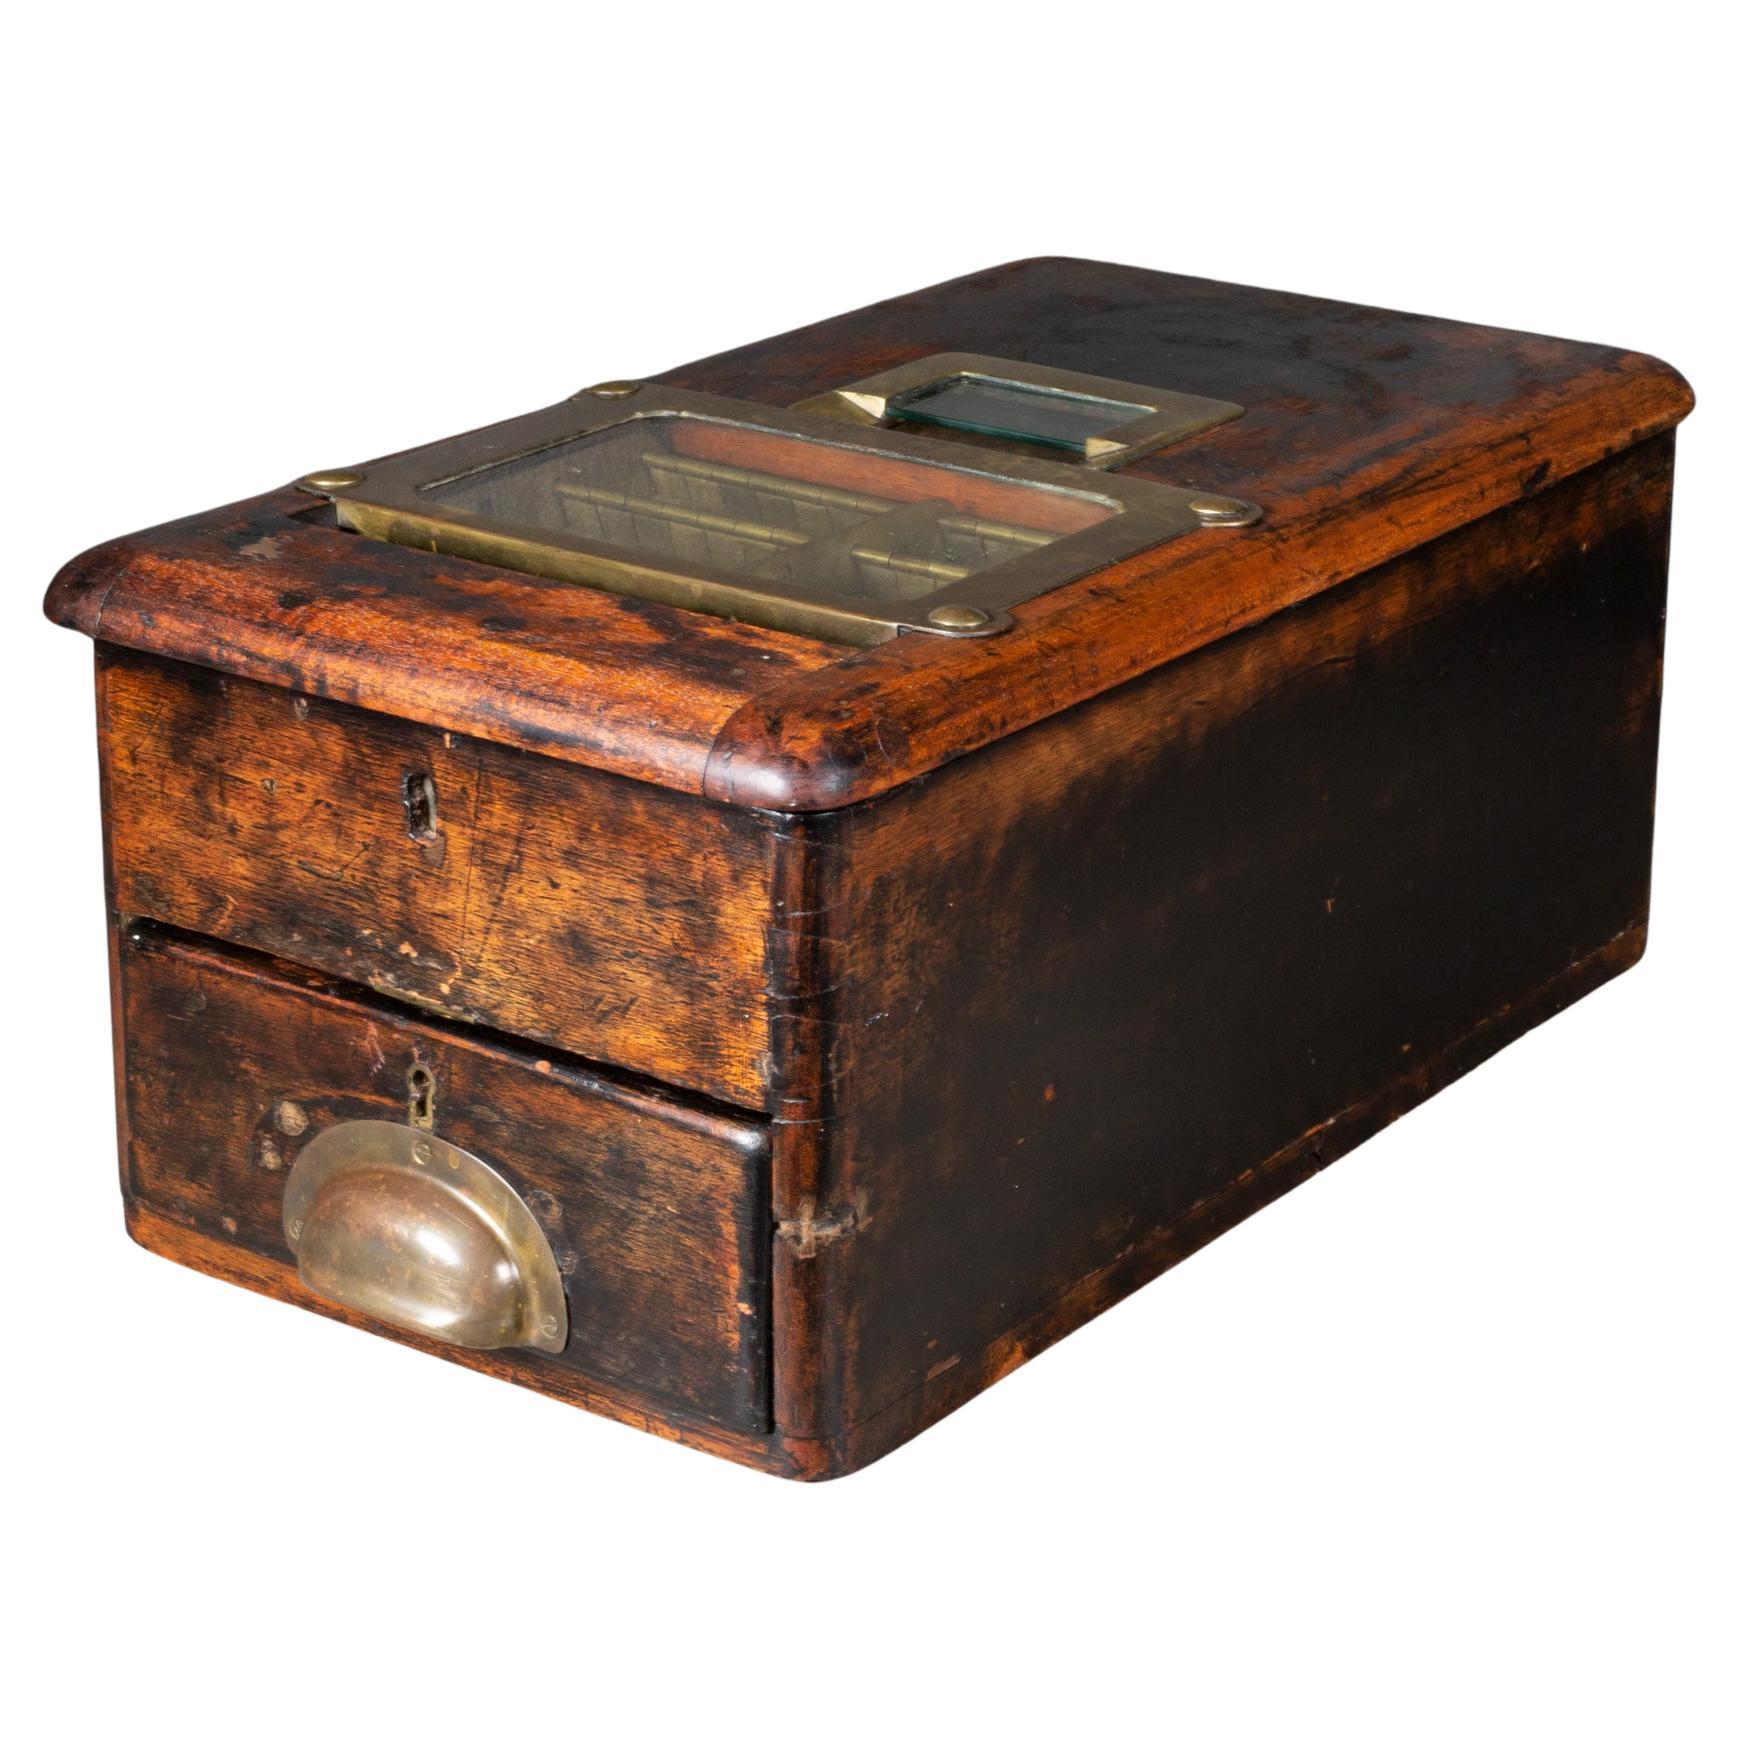 Finales del s. XIX Caja registradora de cierre automático de Mahogany O'Brien c.1890-1900